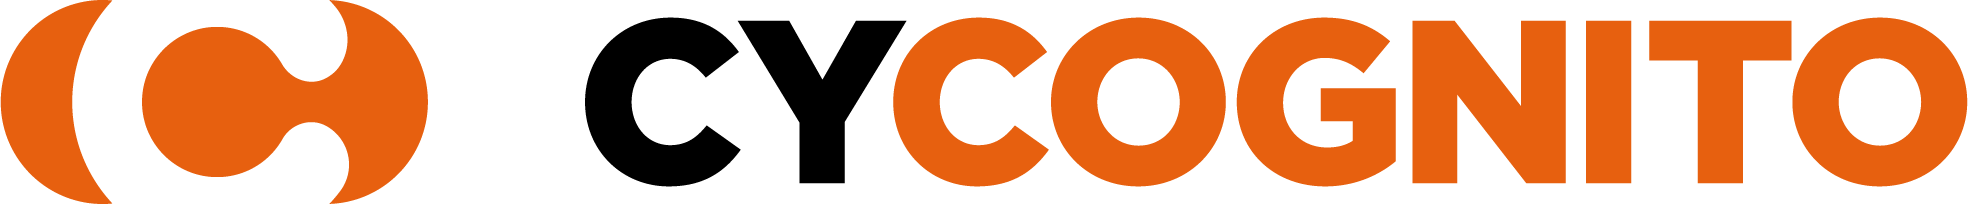 CyCognito logo